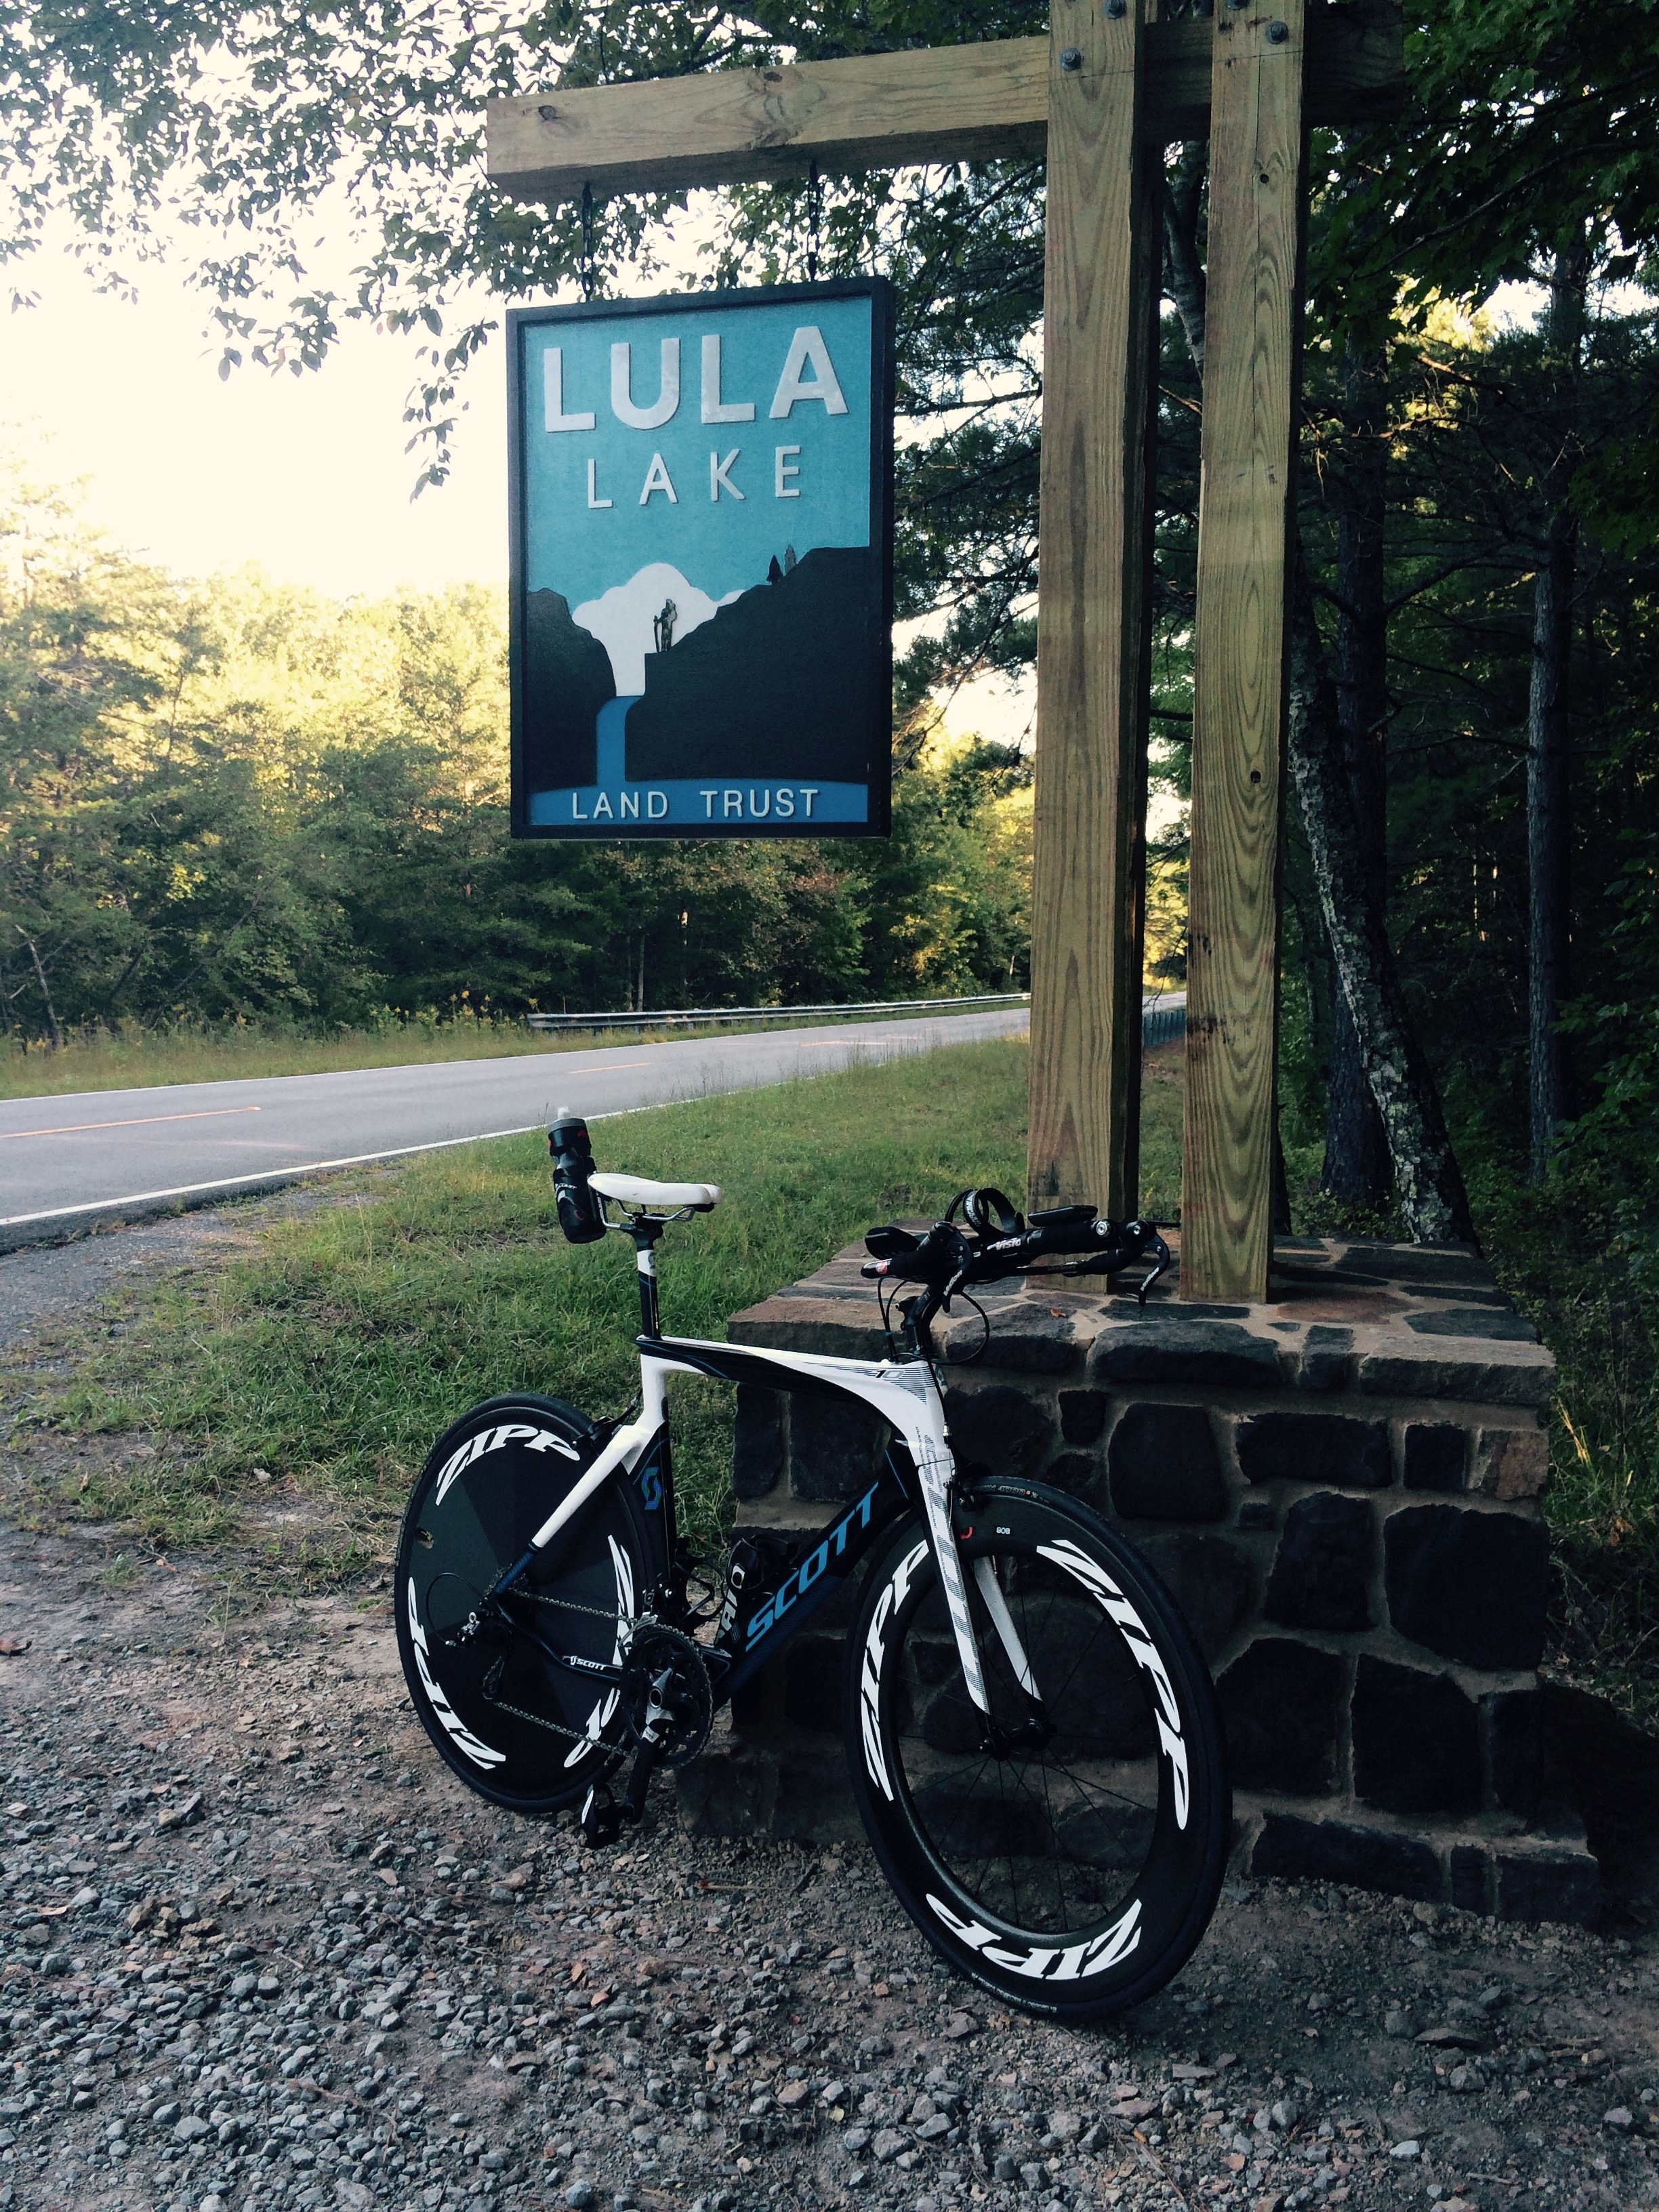 New sign at Lula Lake Land Trust core property